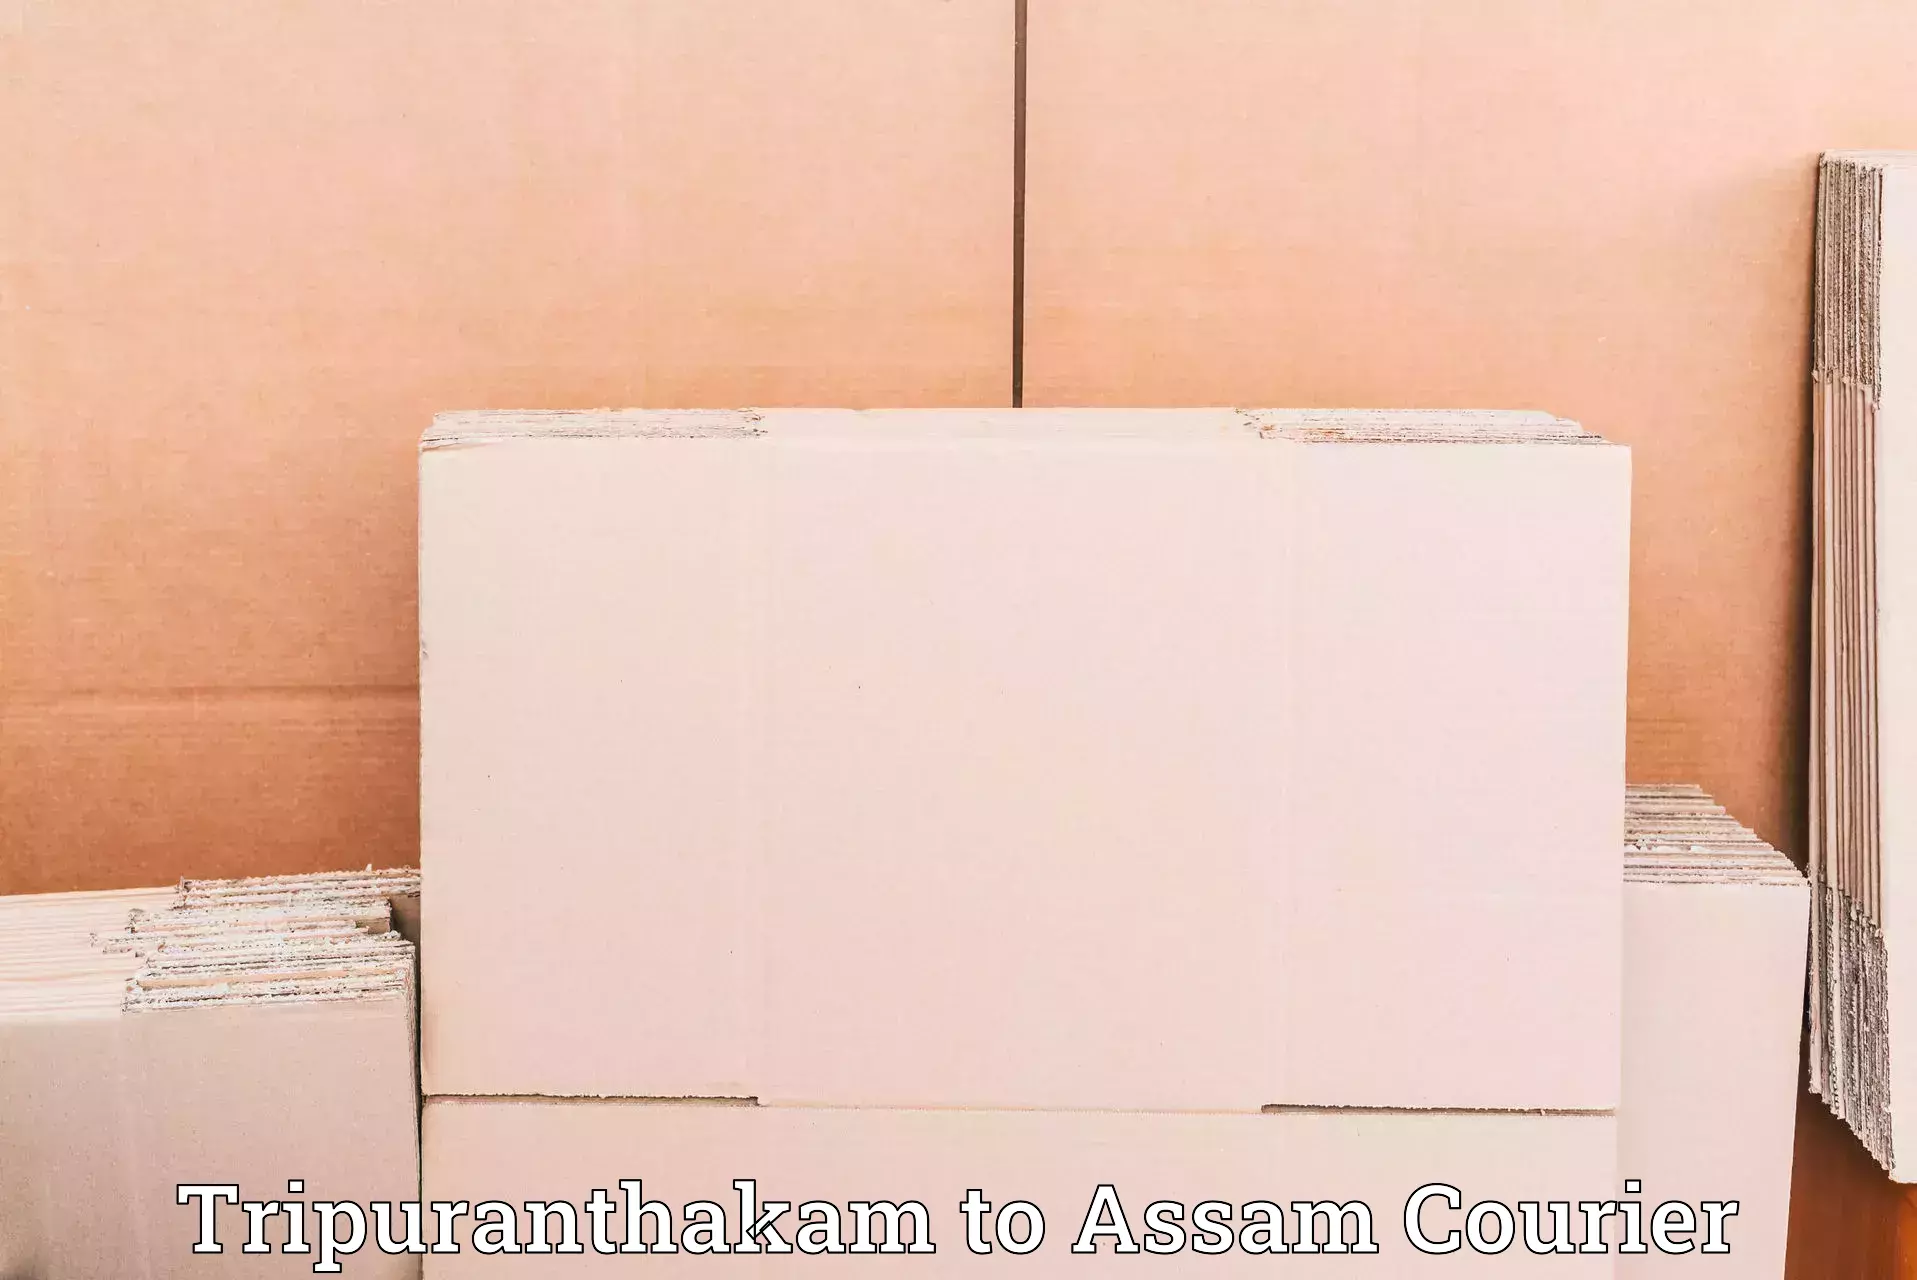 Efficient shipping operations Tripuranthakam to Assam